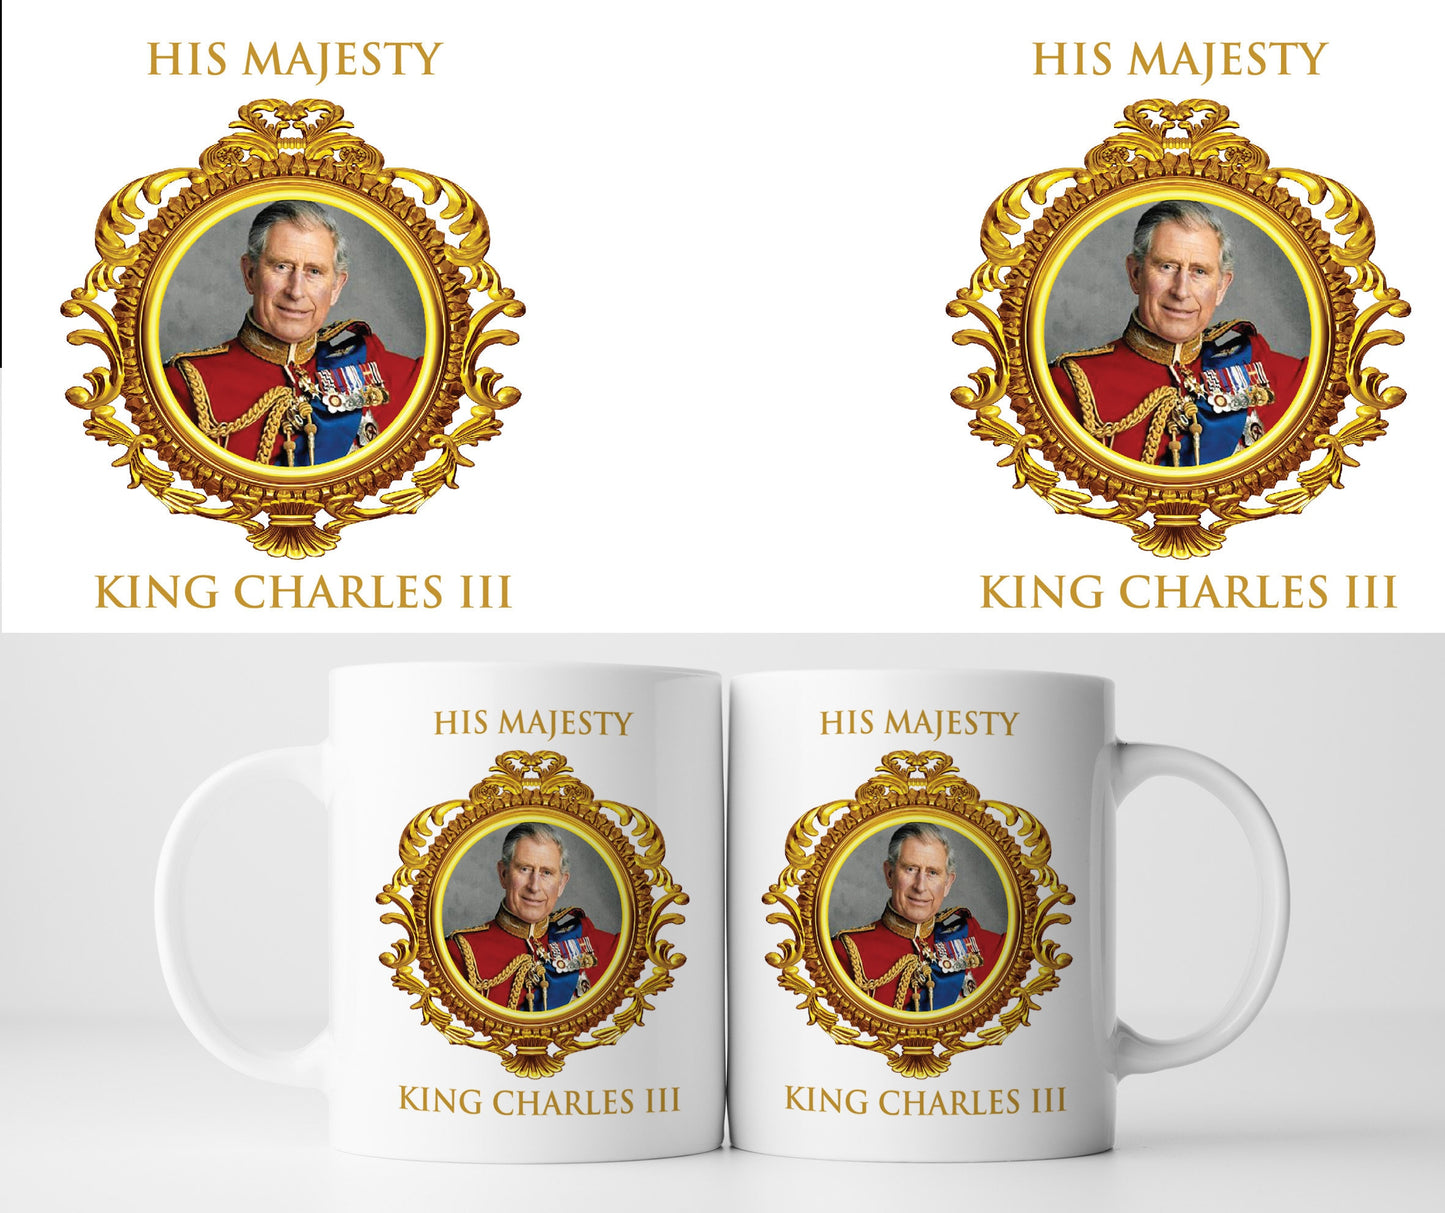 His Majesty King Charles III - Tribute Commemorative Mug A UK Britain Queen Elizabeth